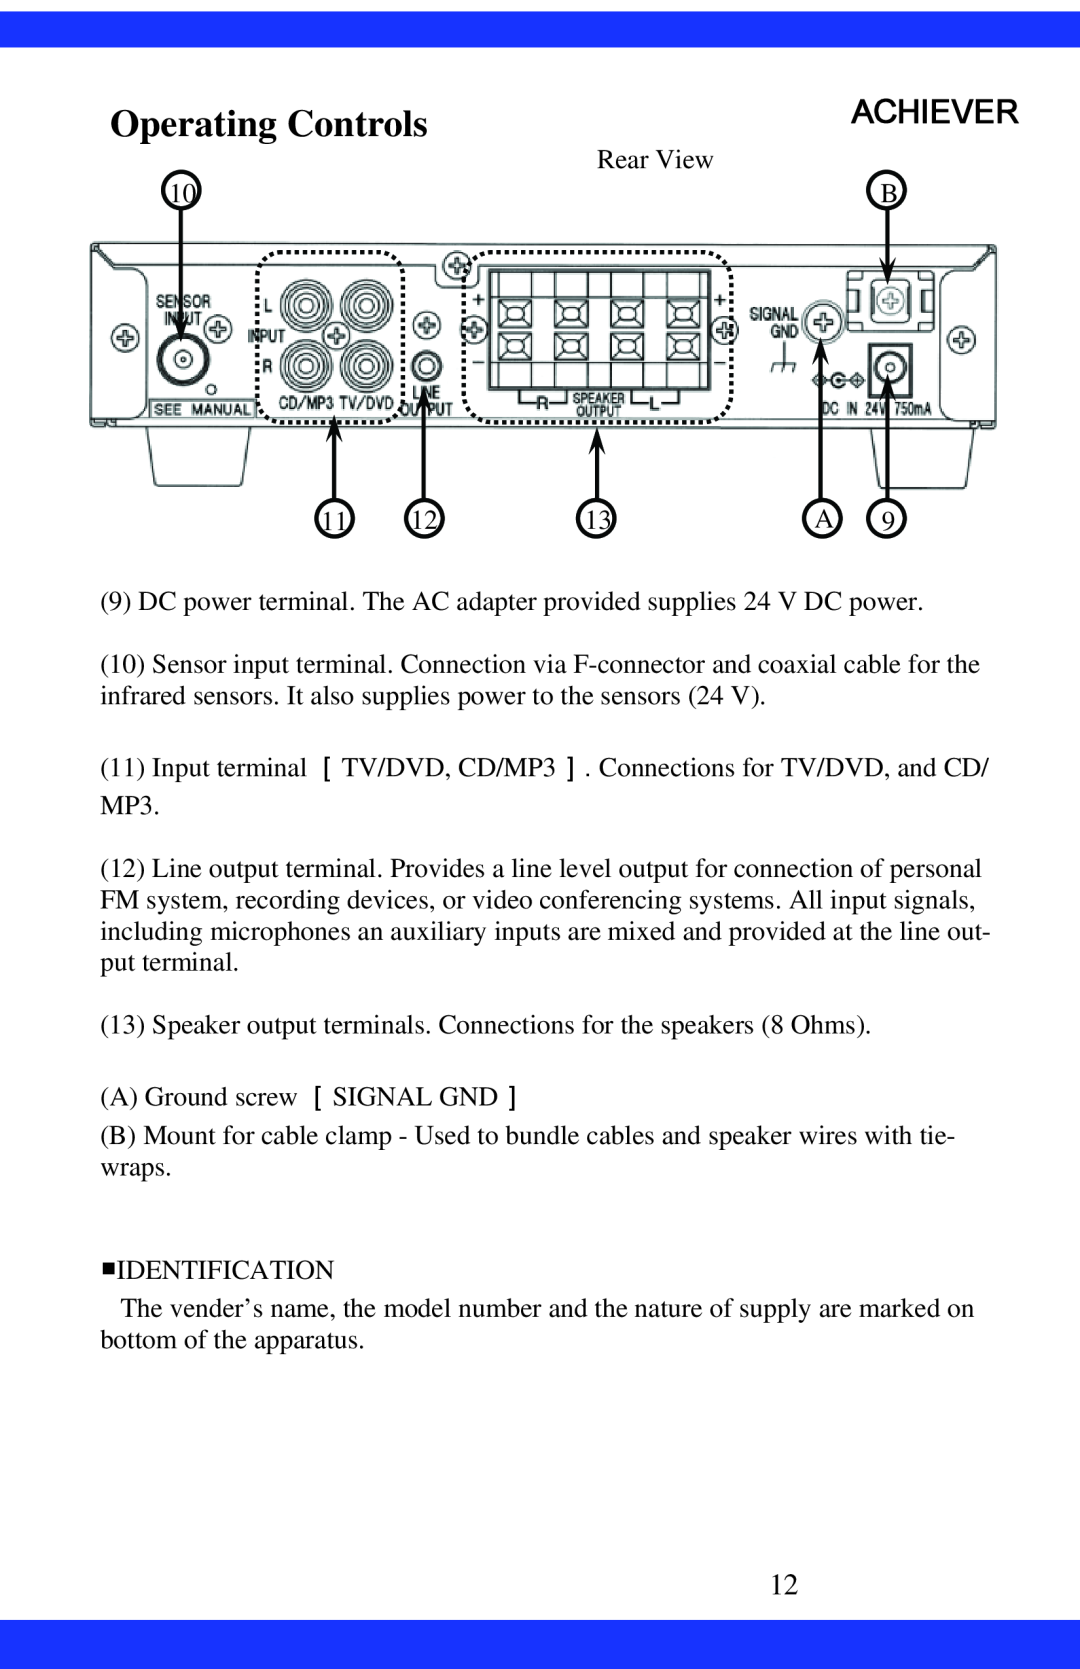 Dukane CAE-20W instruction manual Operating Controls, Achiever 